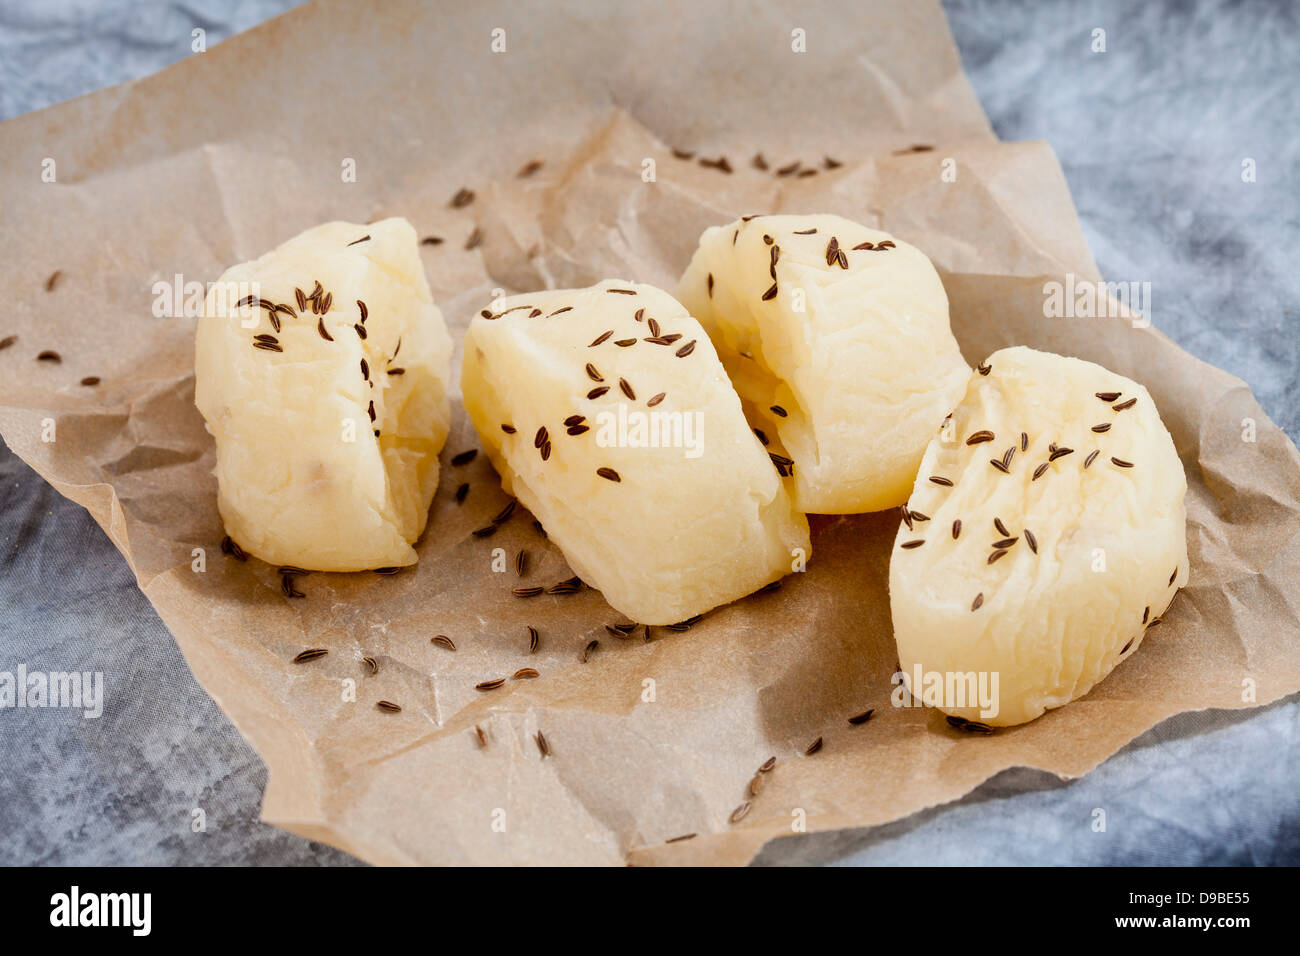 Harzer Roller Käse auf braunem Papier, Nahaufnahme Stockfotografie - Alamy